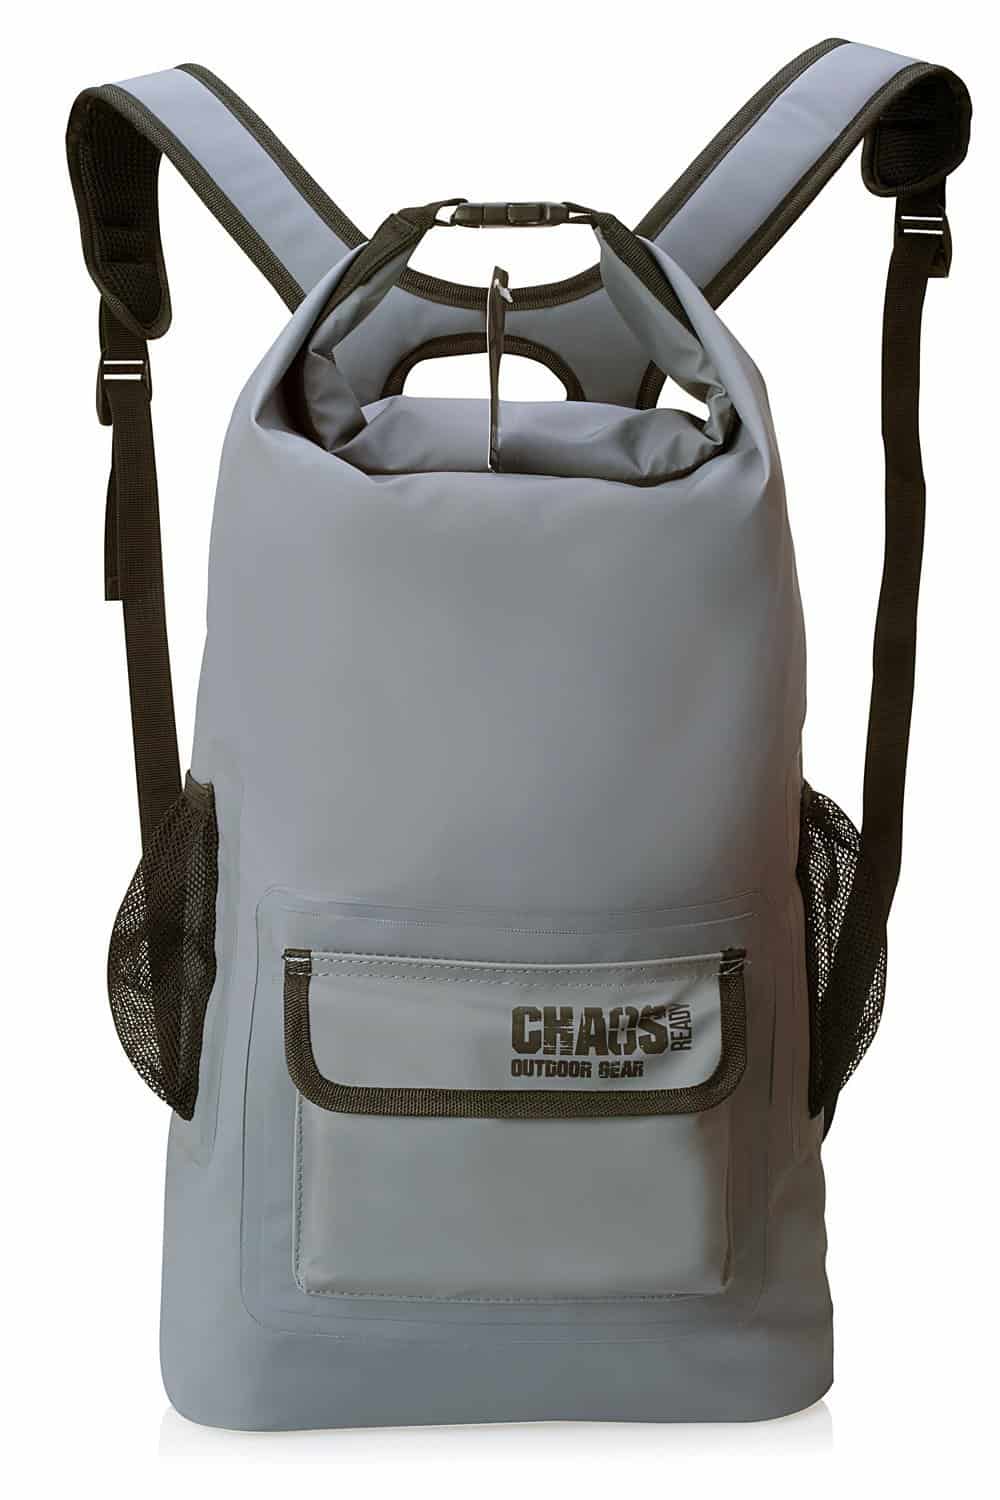 Chaos Ready® Waterproof Backpack